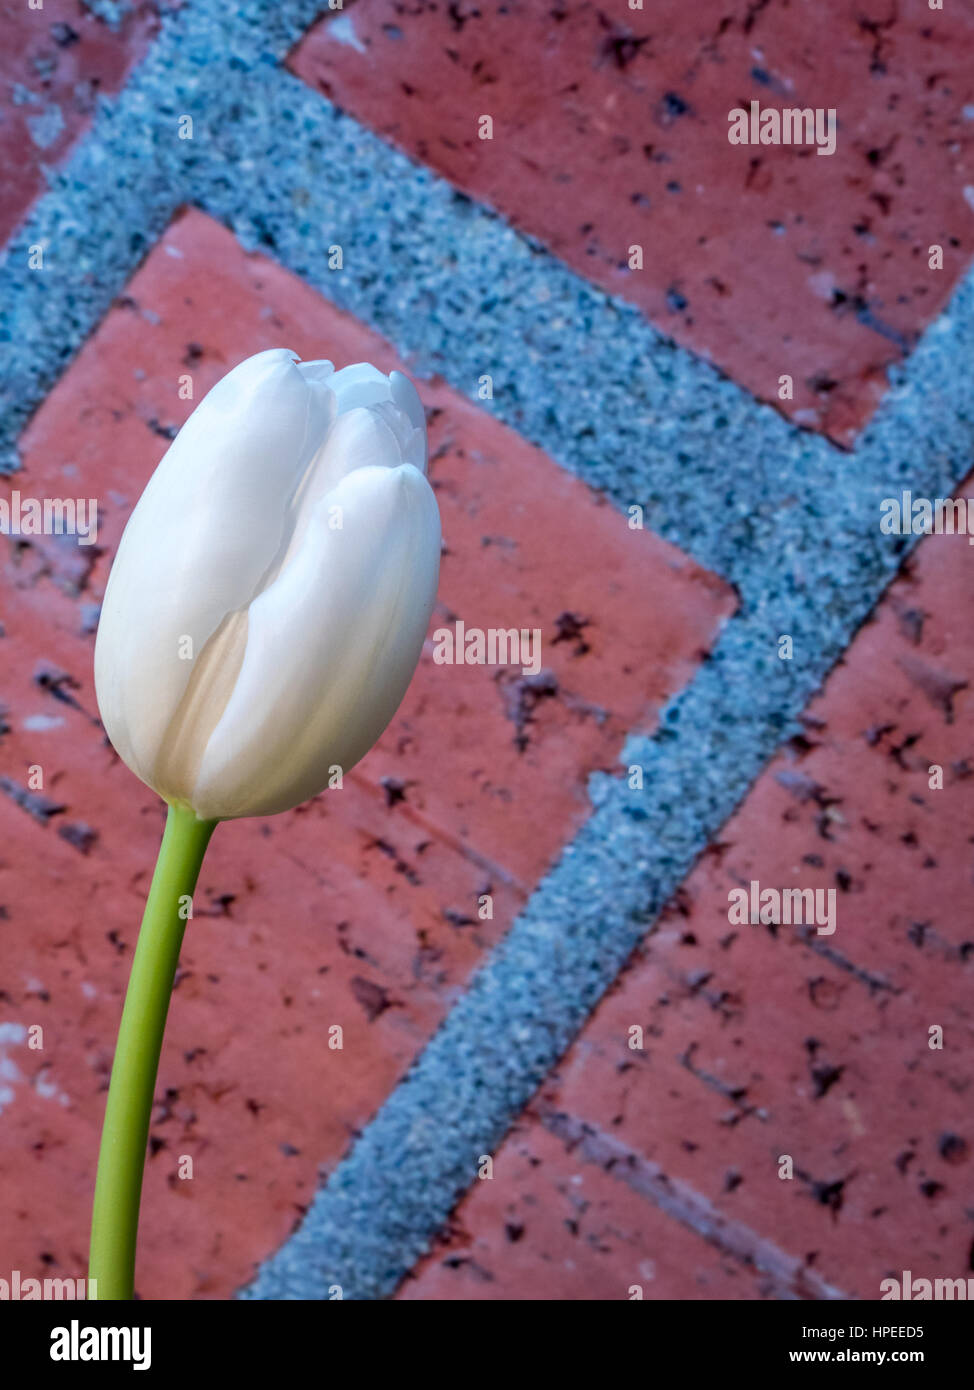 White tulip flower, portrait orientation Stock Photo